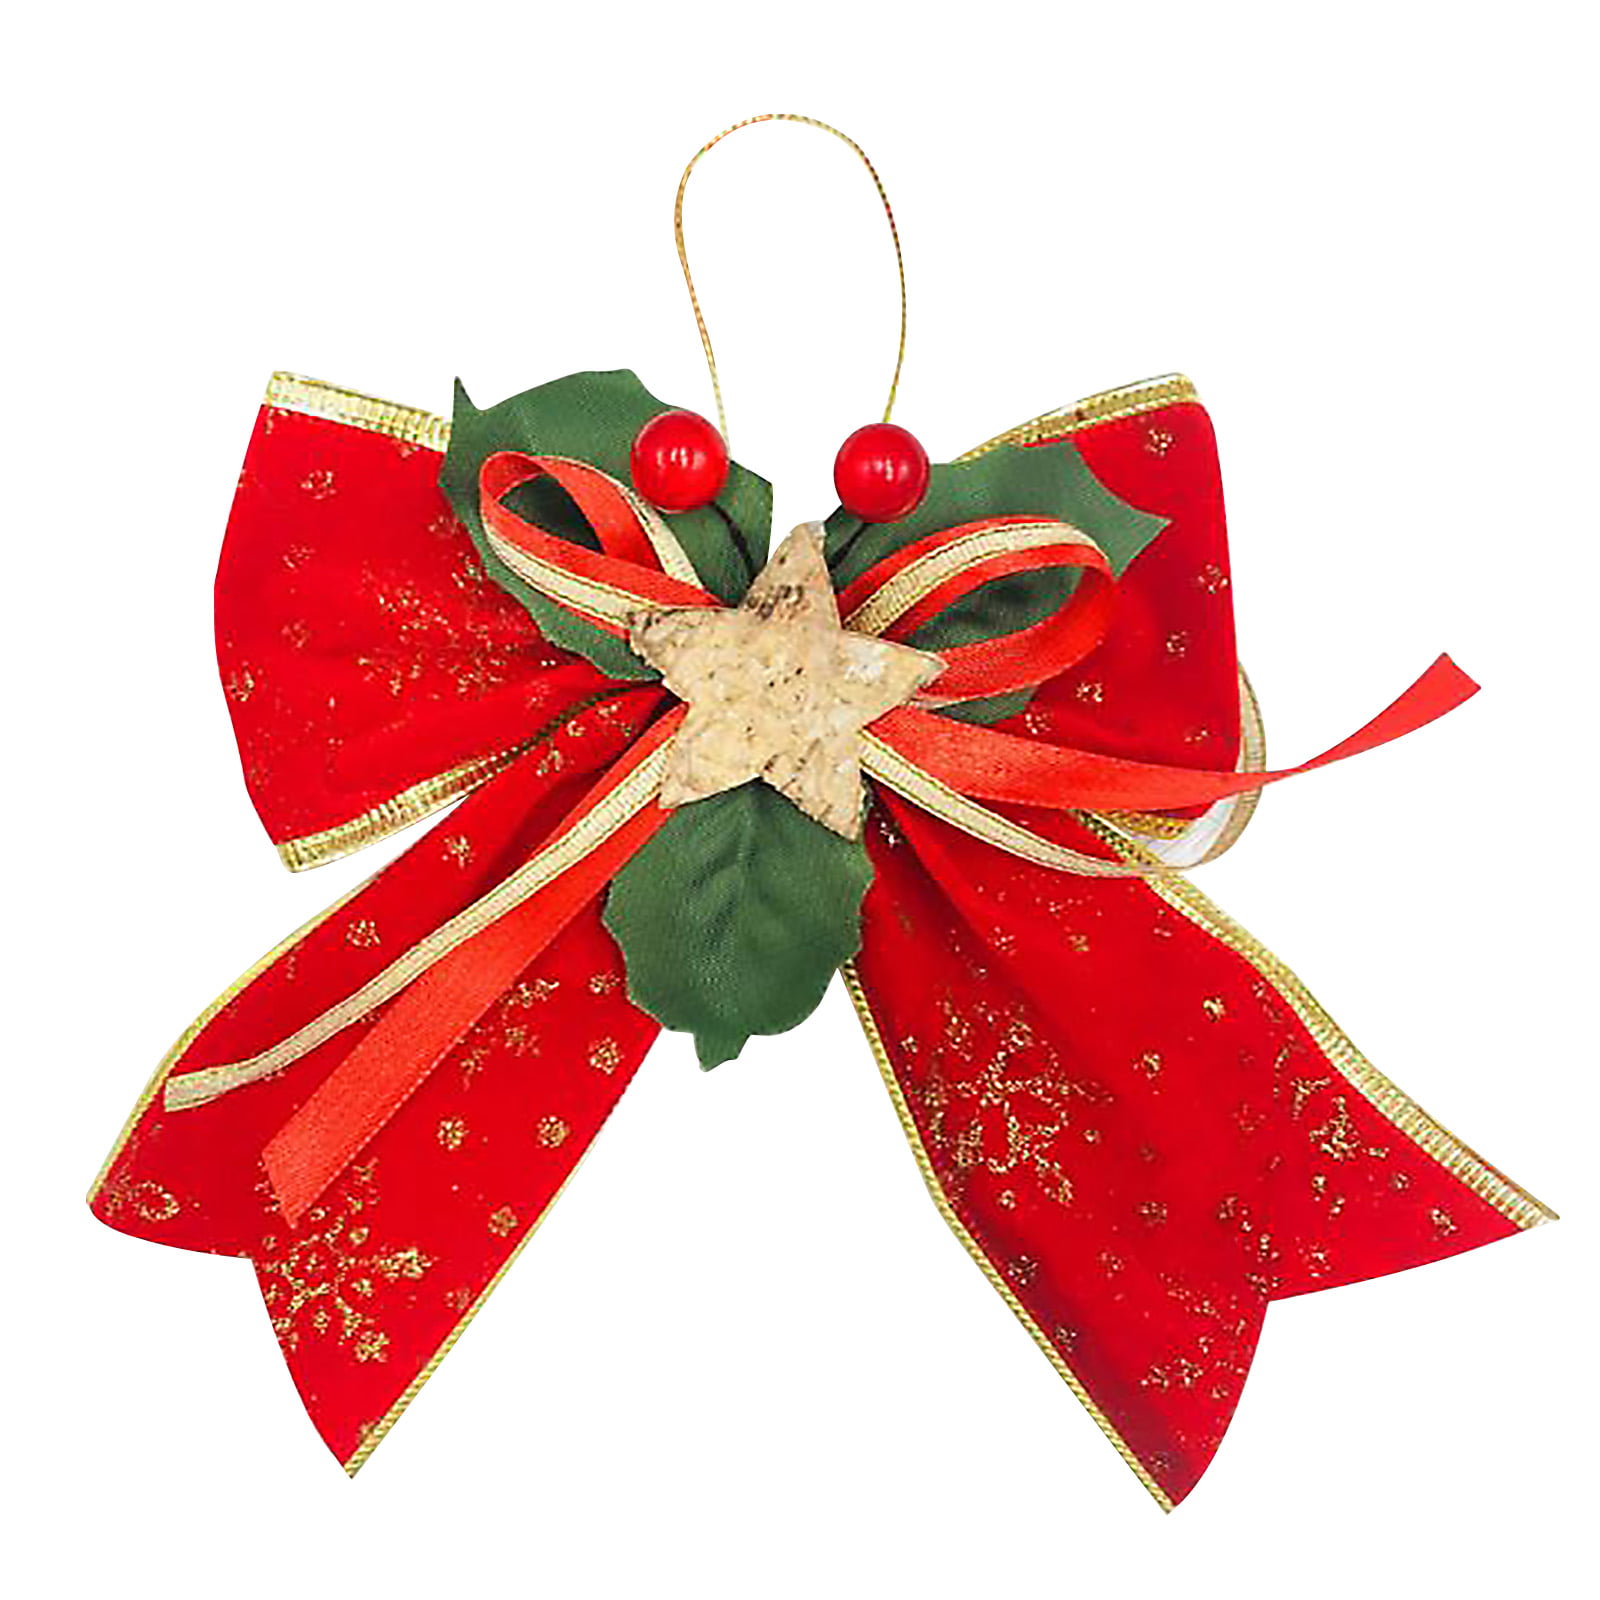 Gold/Black Ribbon 30ft - Wondershop Christmas Gift Ribbon for gift